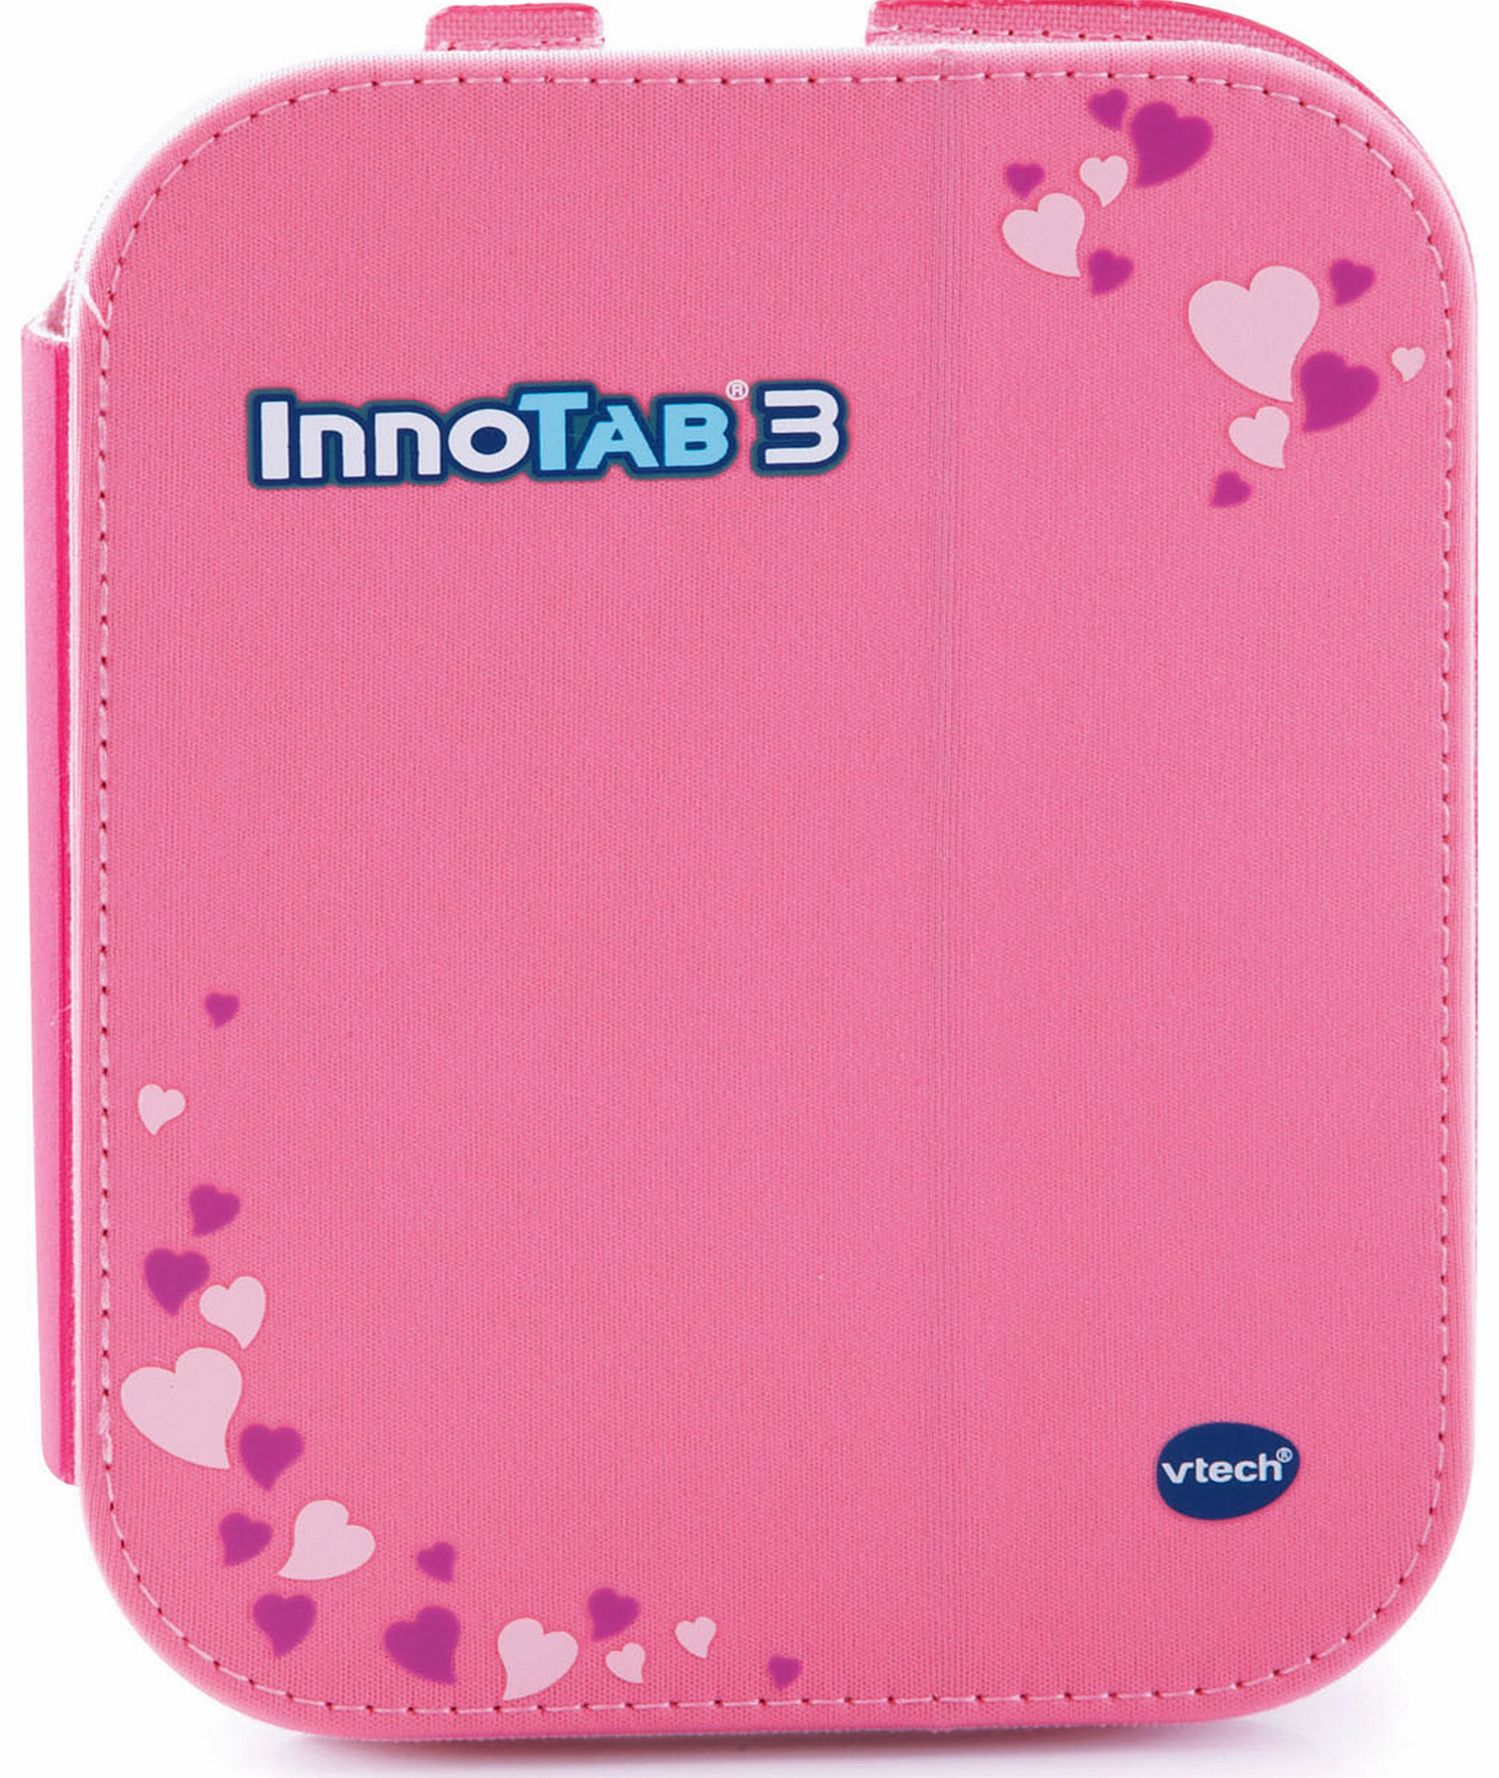 InnoTab 3 Folio Case - Pink